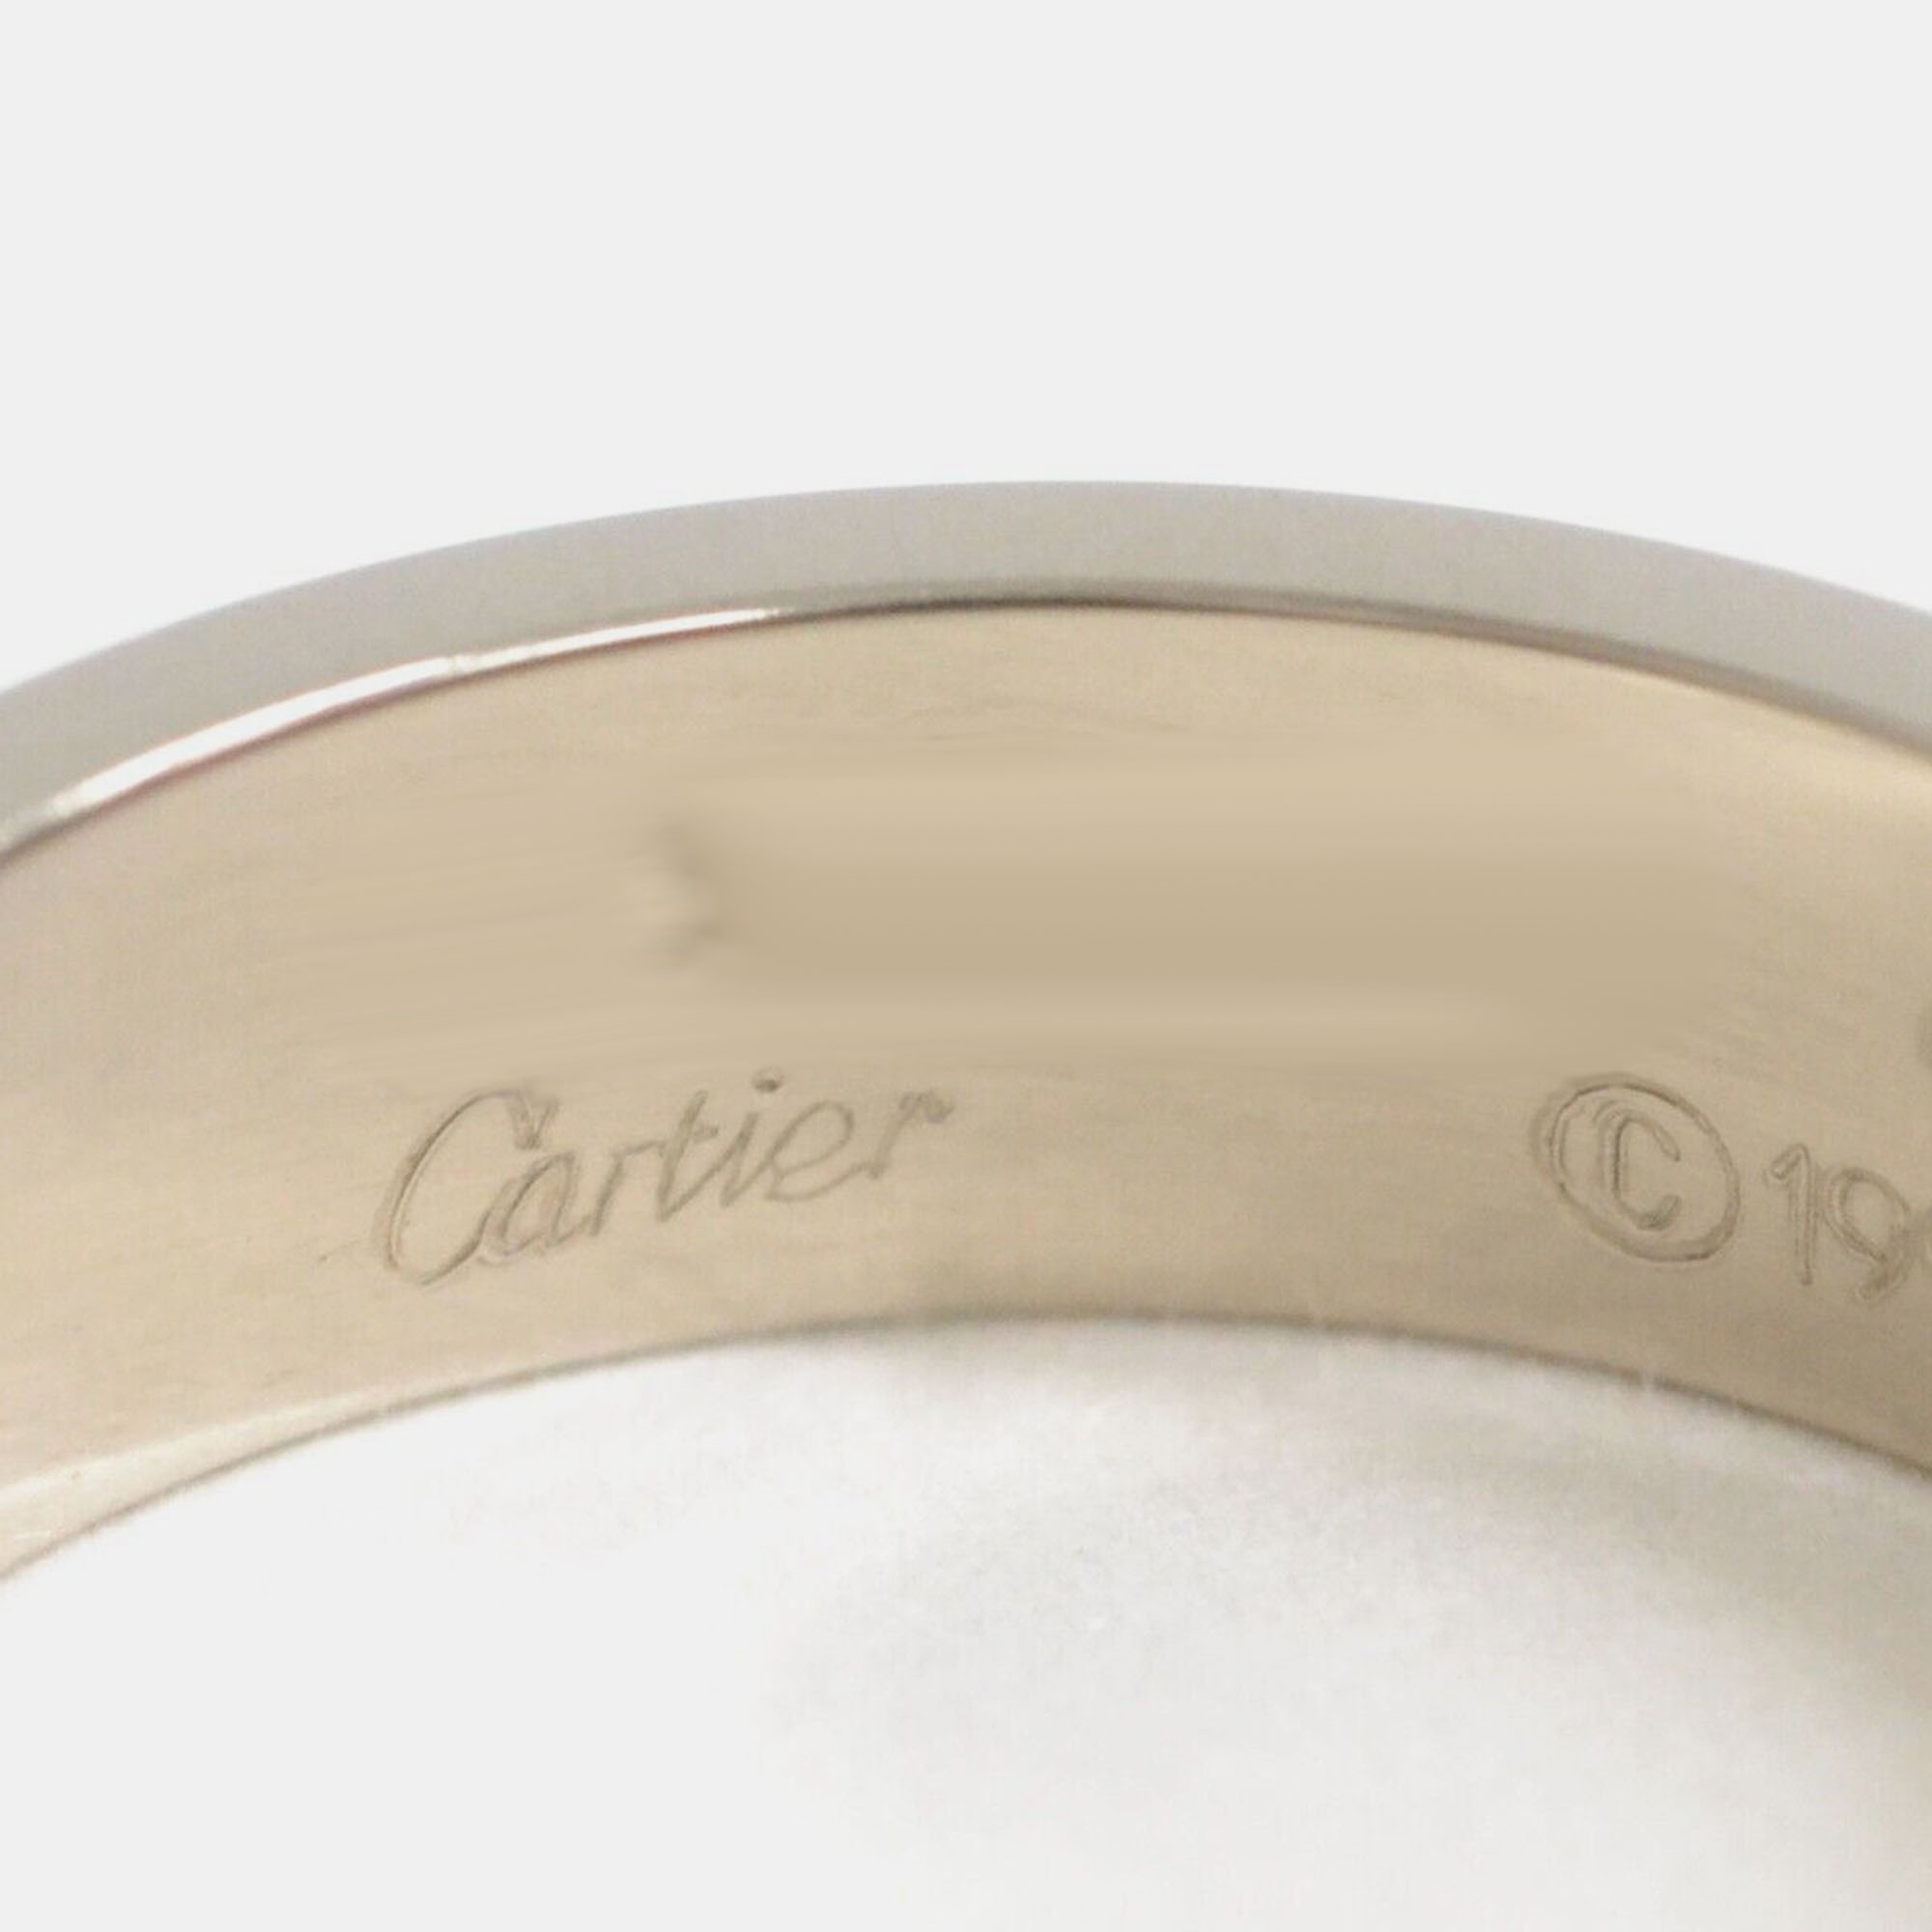 Cartier Love Vintage 18K White Gold Ring EU 62